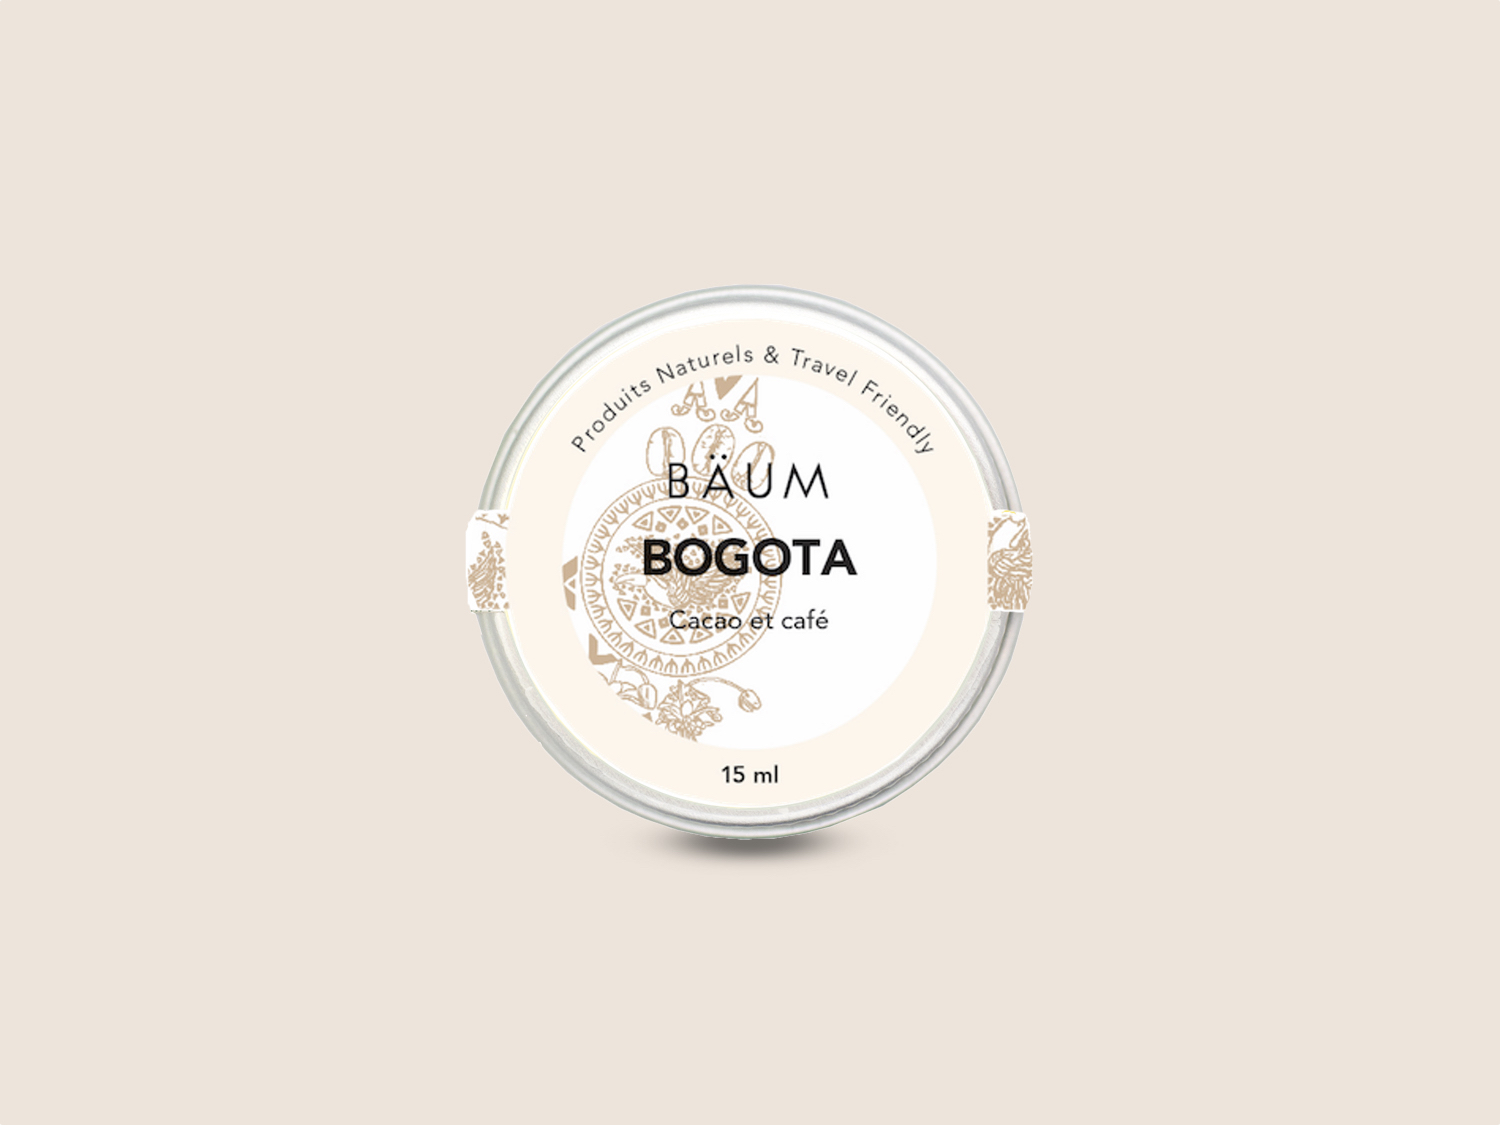 BOGOTA product shot_BÄUM.jpg